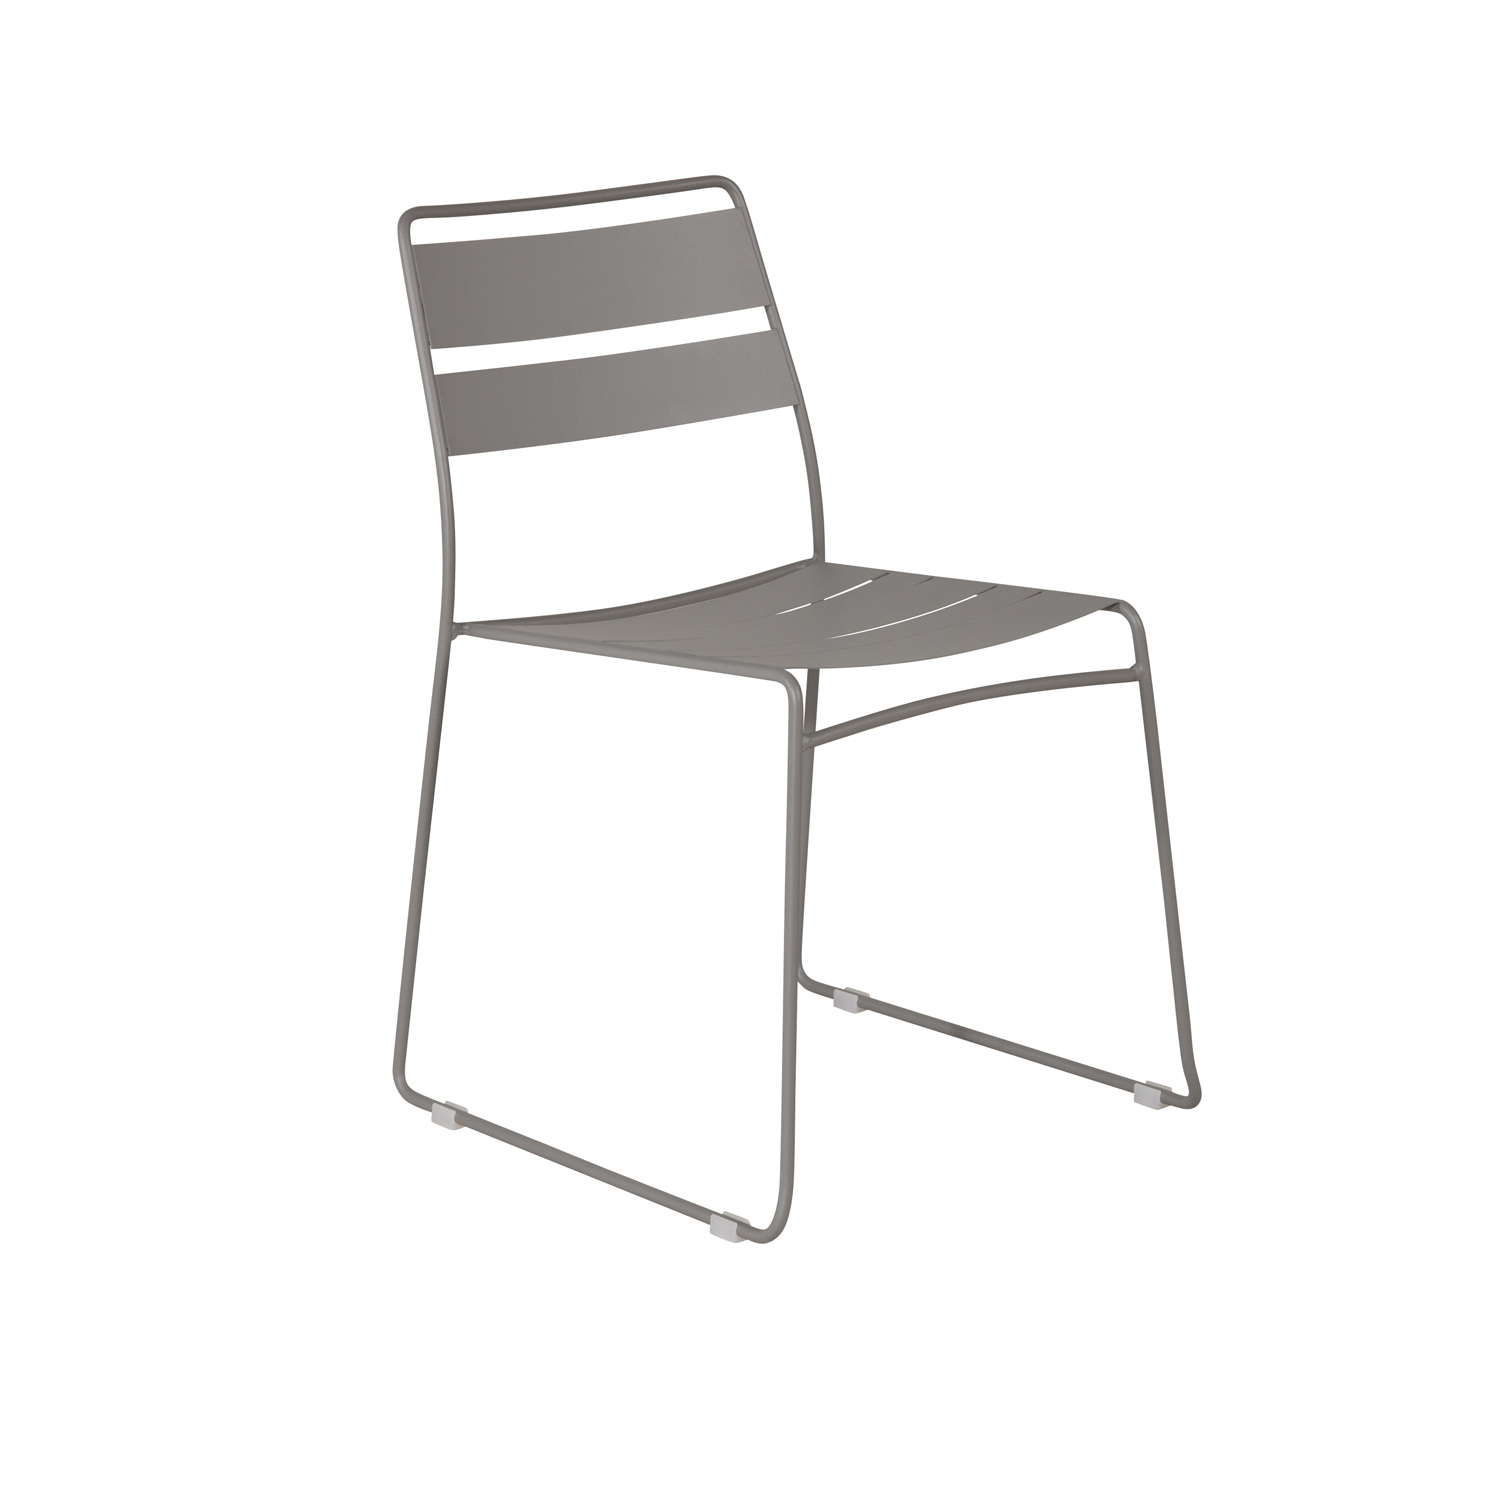 Køb VENTURE DESIGN Lina havestol – grå stål